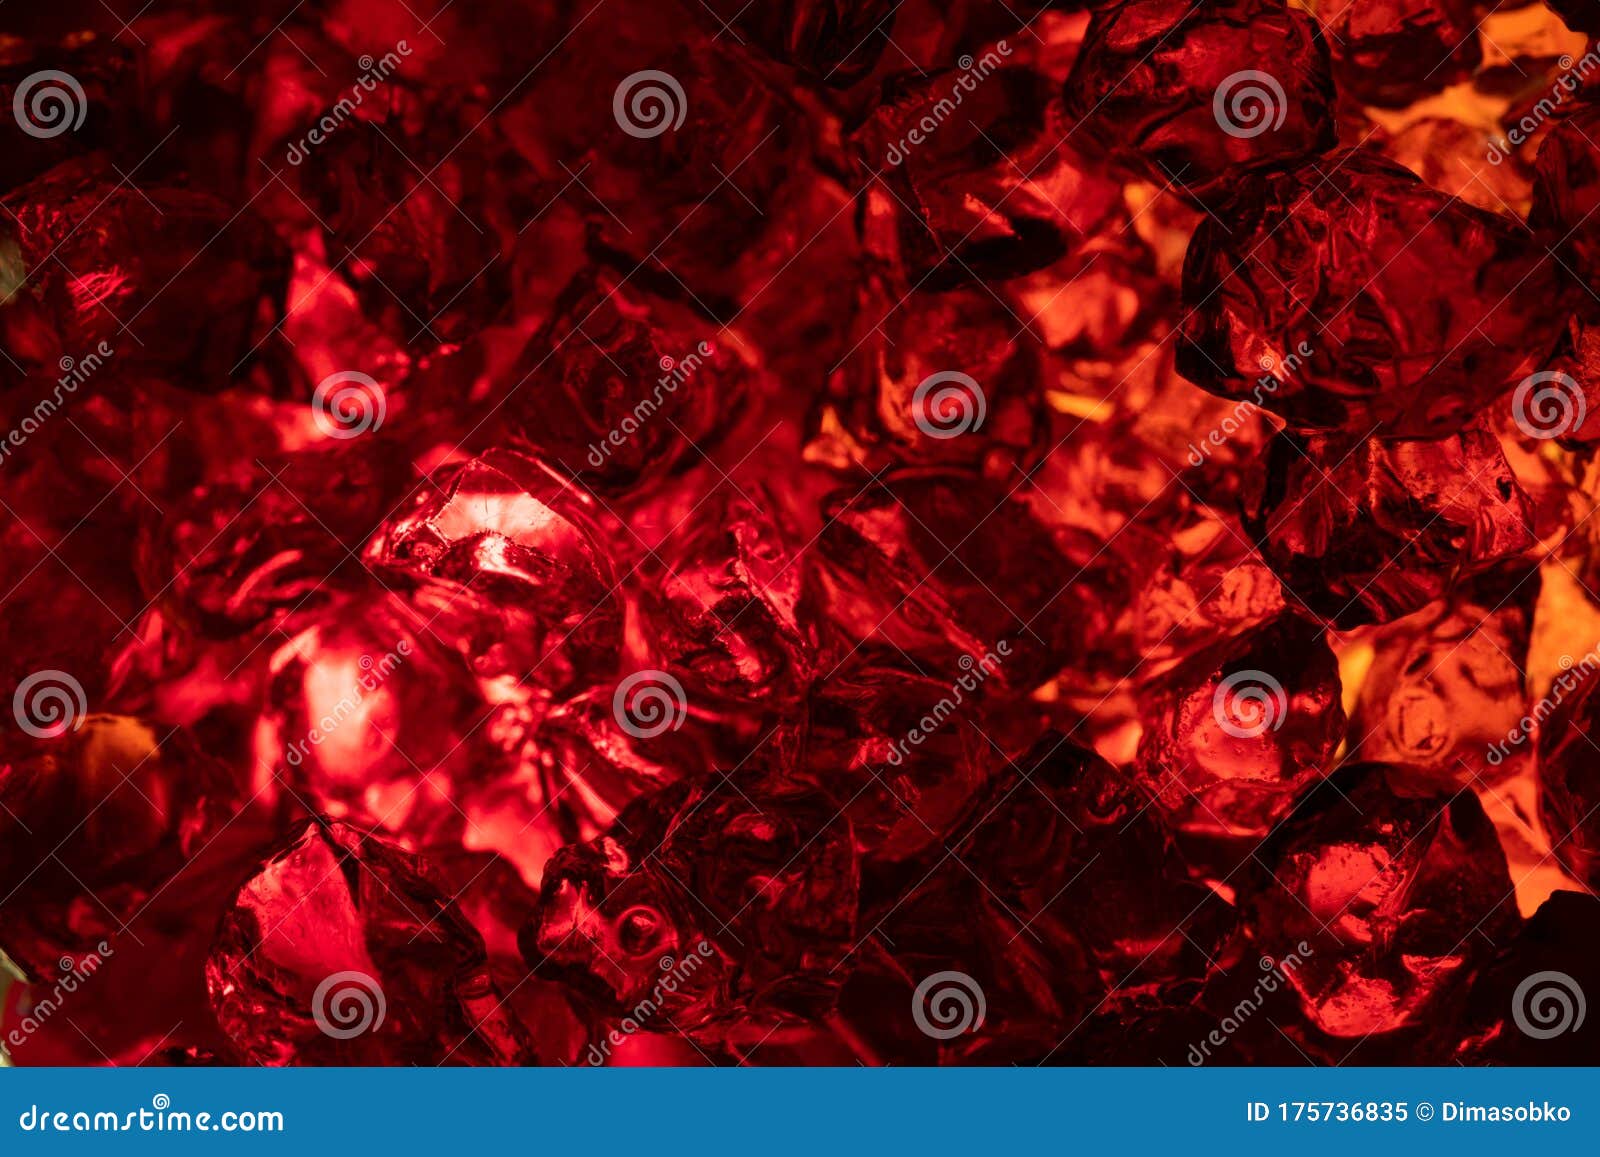 macro photo of red gems stone carat